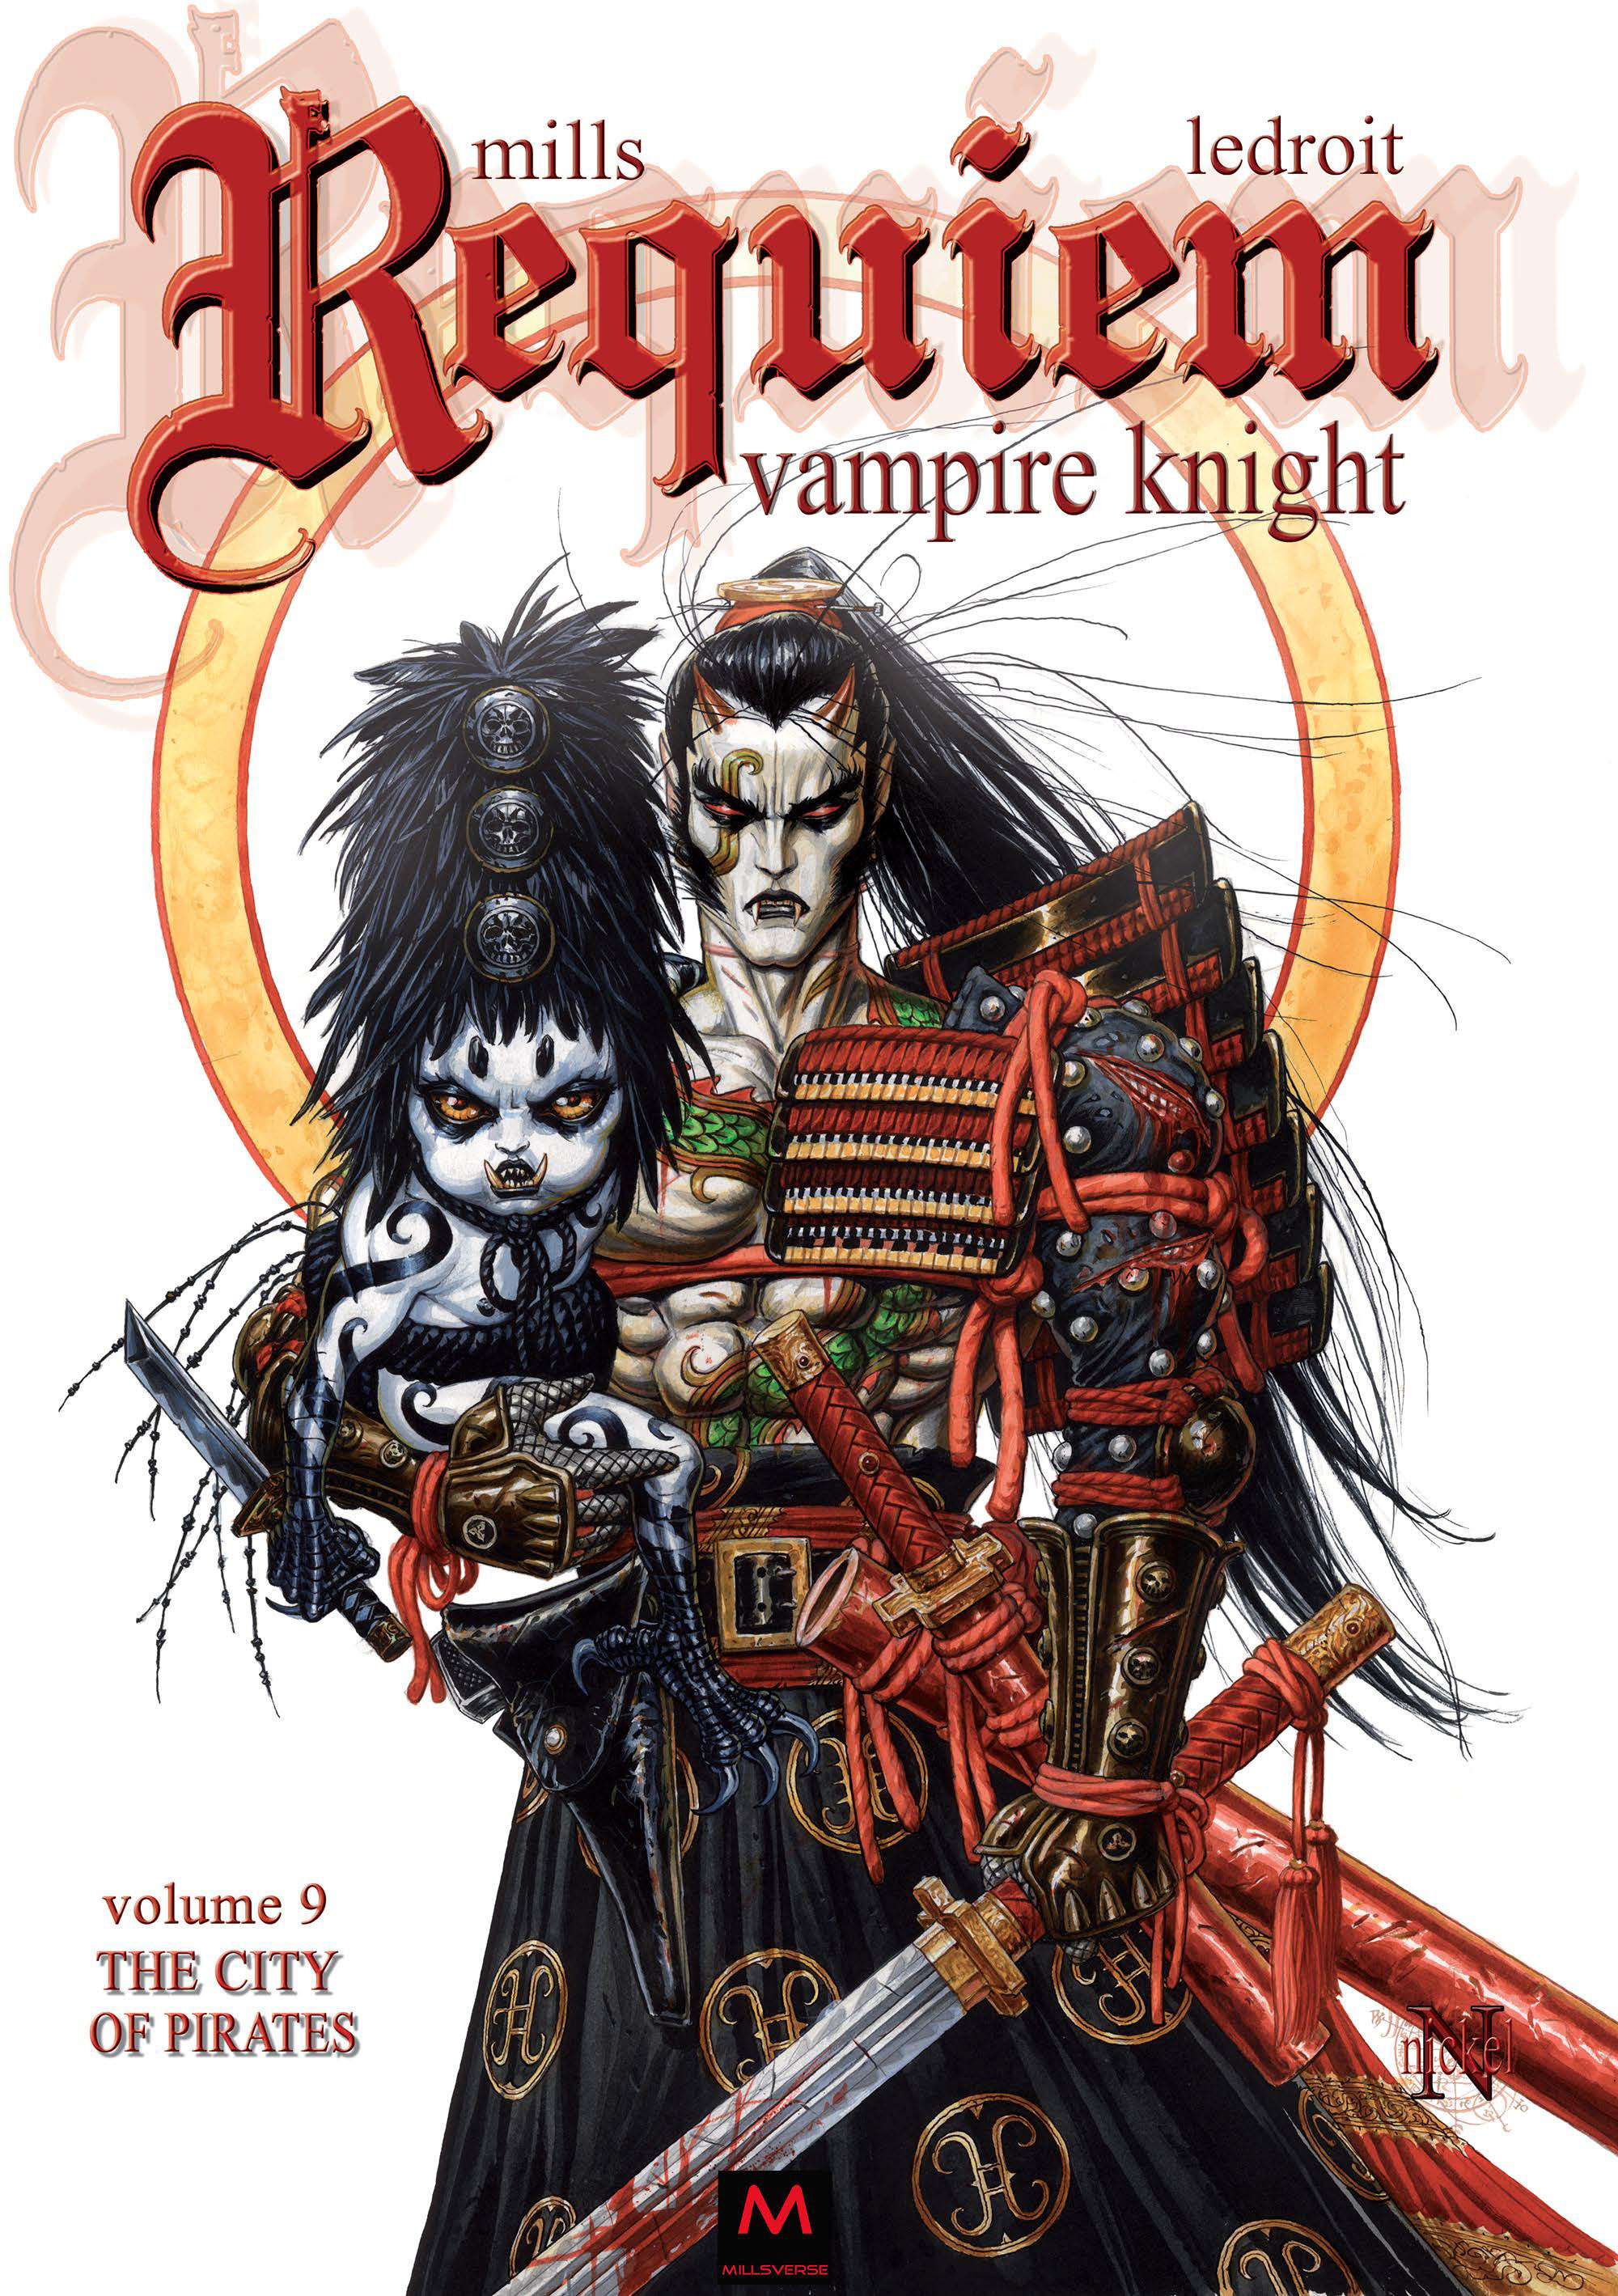 Requiem Vampire Knight Issue 9 | Read Requiem Vampire Knight Issue 9 comic  online in high quality. Read Full Comic online for free - Read comics  online in high quality .|viewcomiconline.com